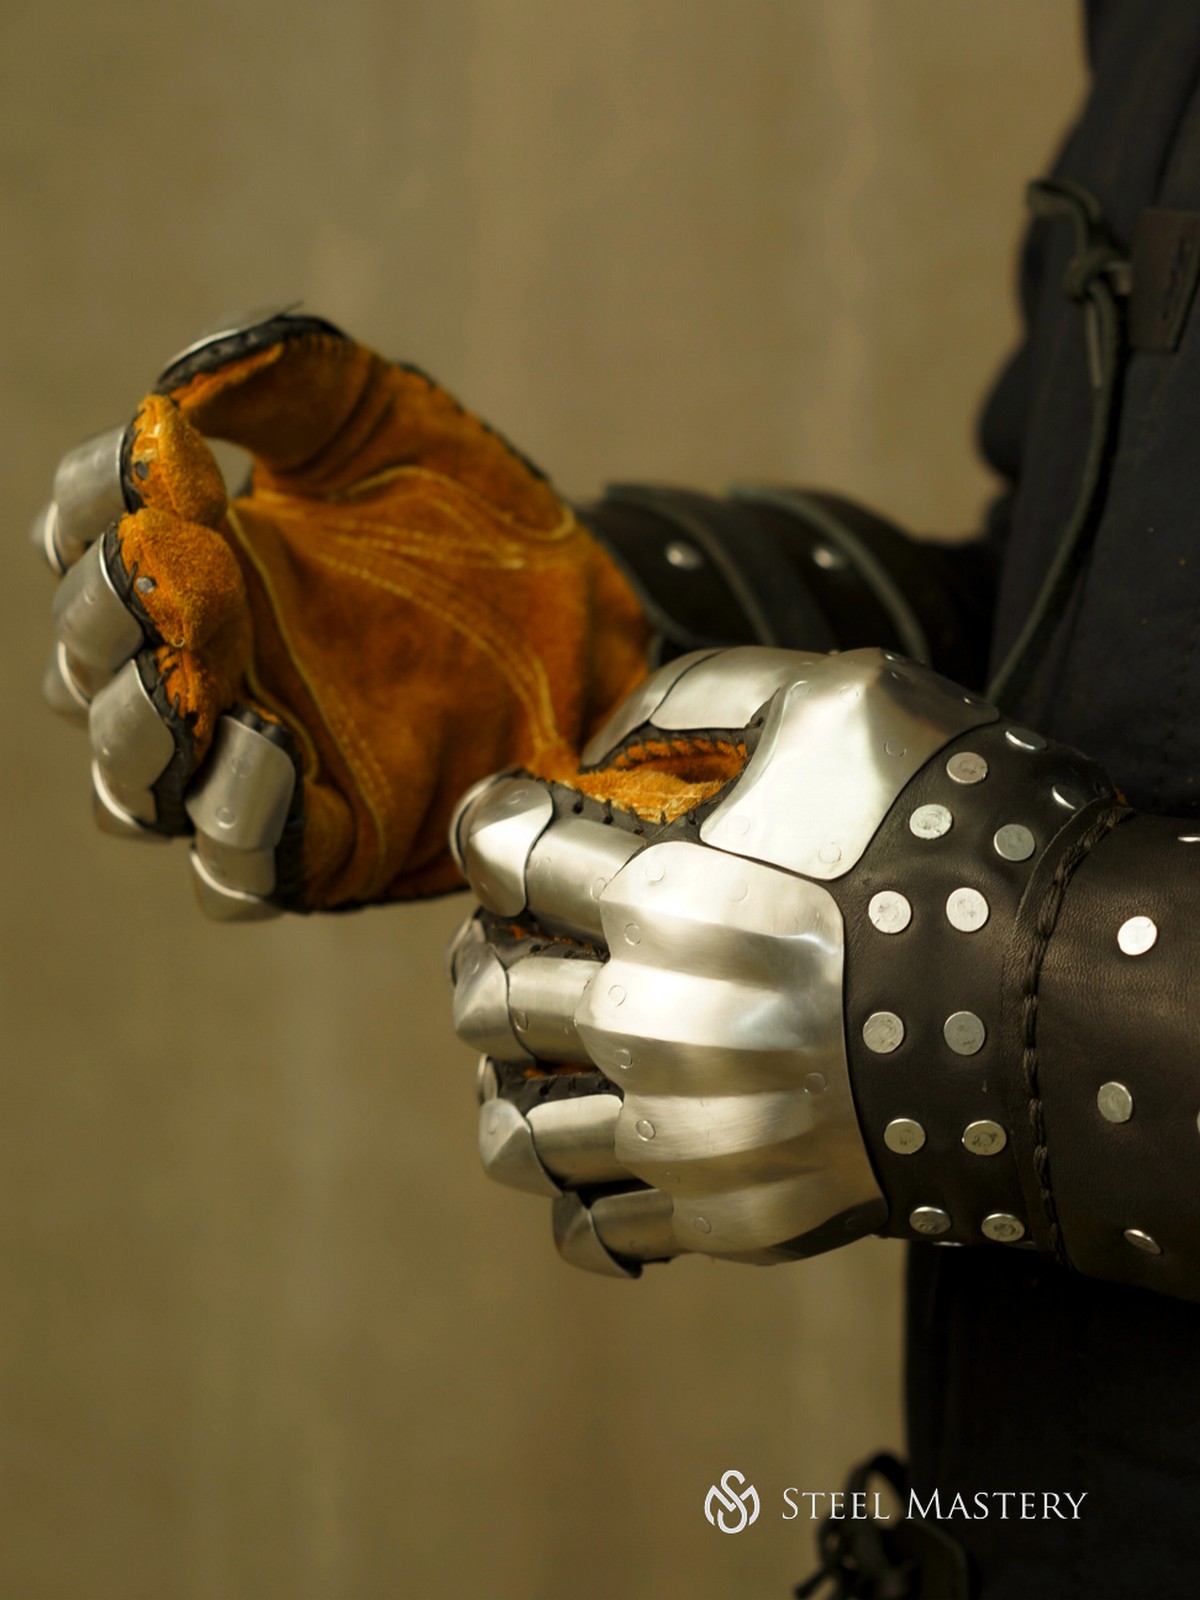 New model of Visby brigandine gloves! 